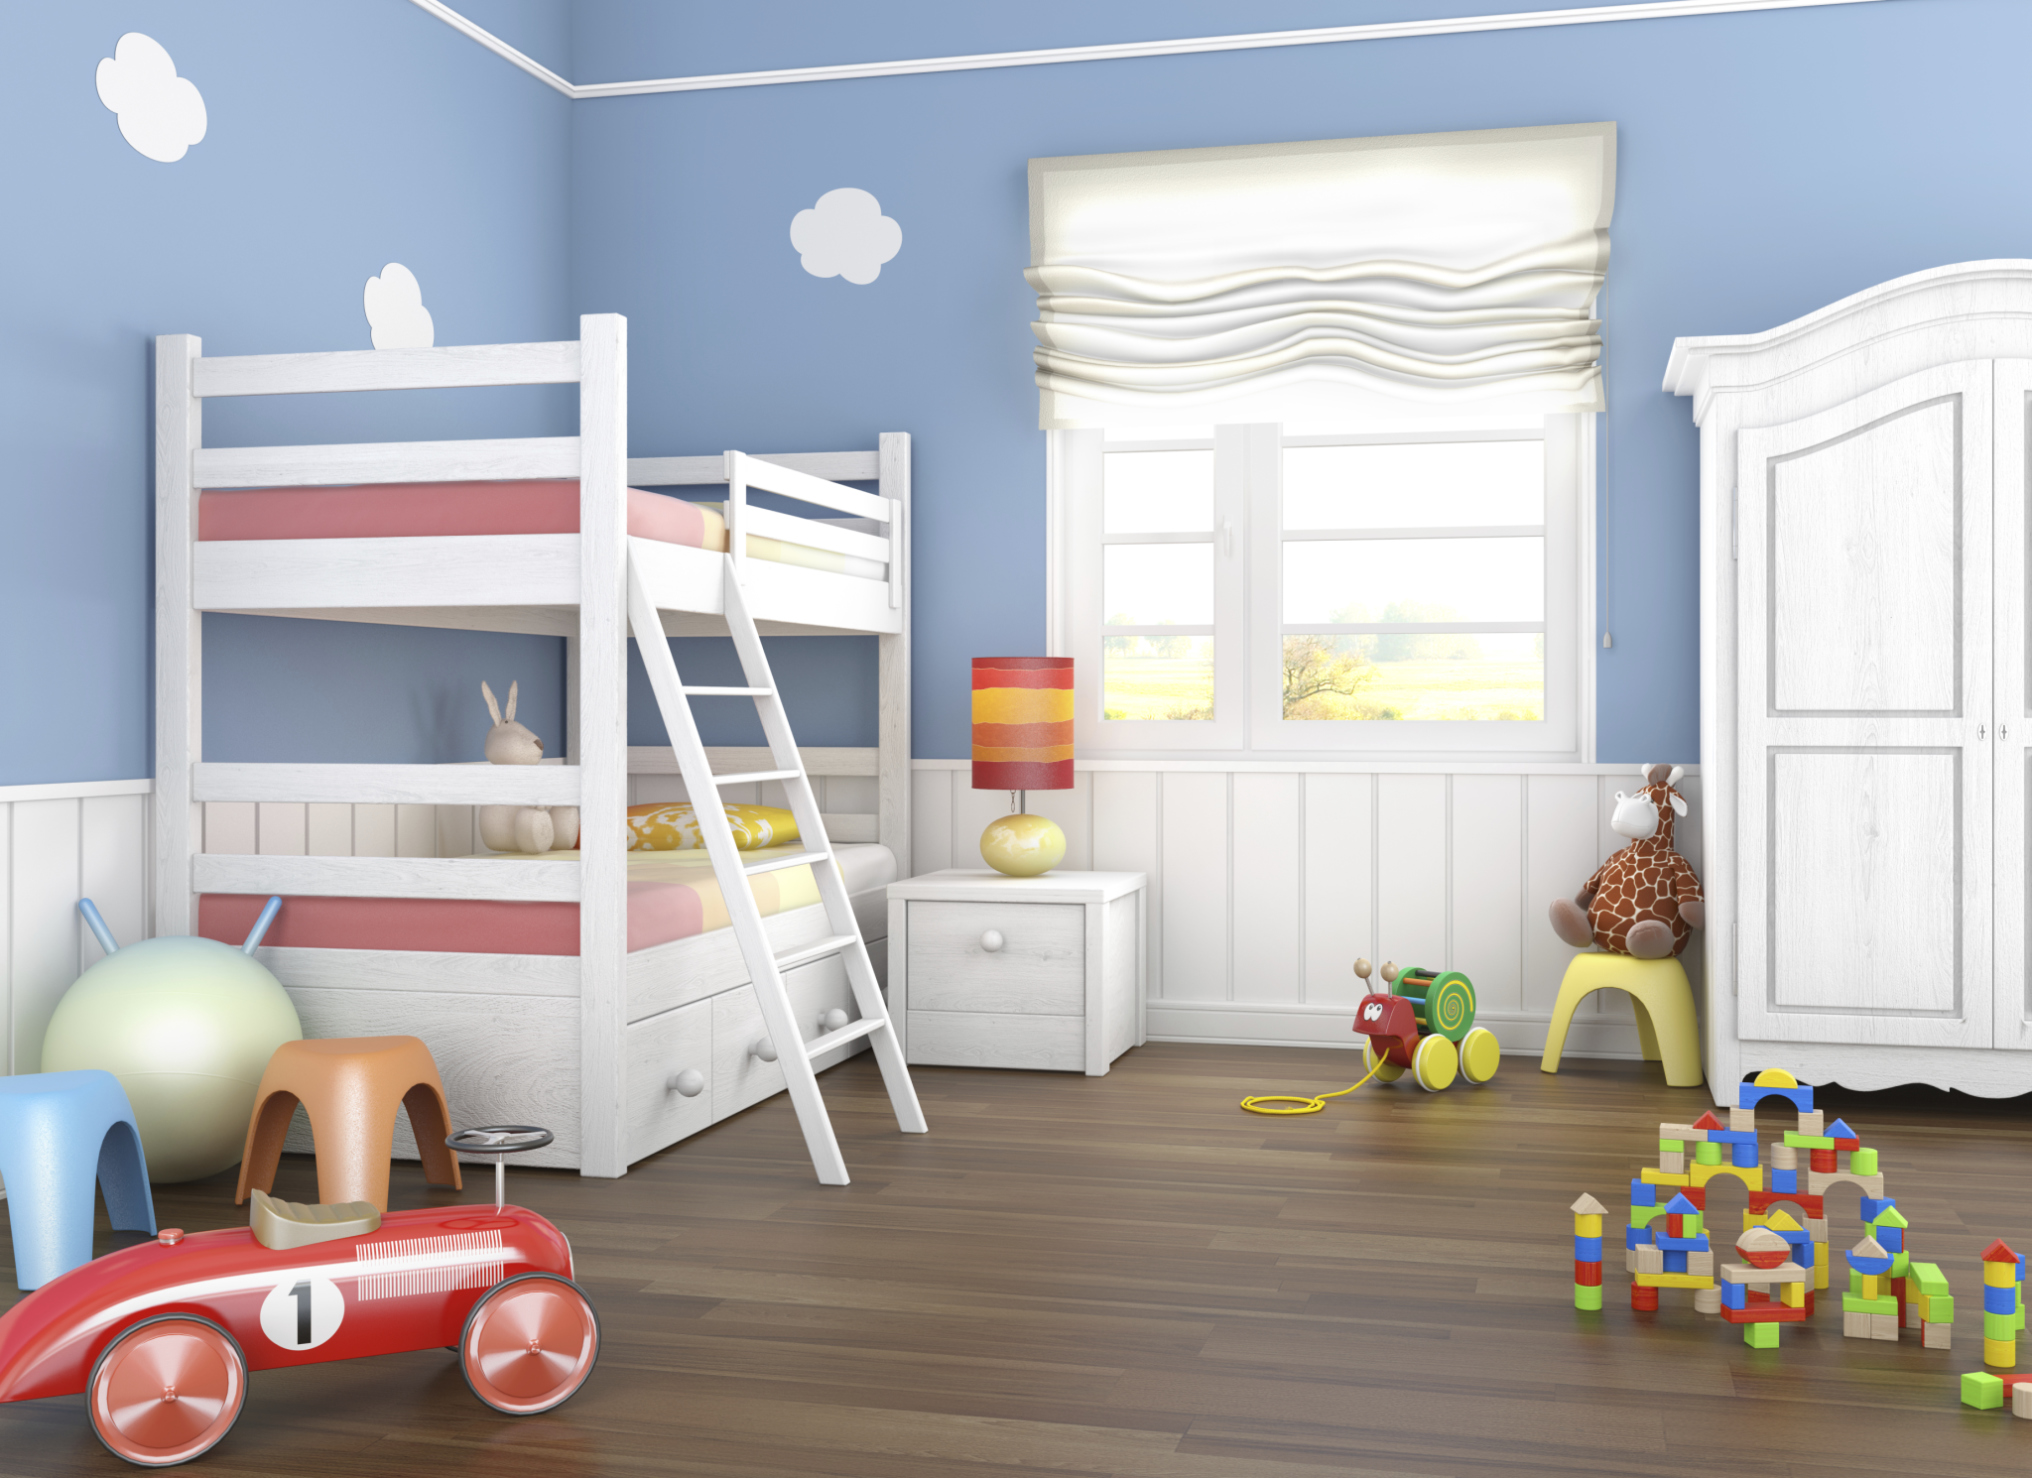 Bedroom toys. Детская комната. Детский интерьер. Комната для детей. Детская комната фон.